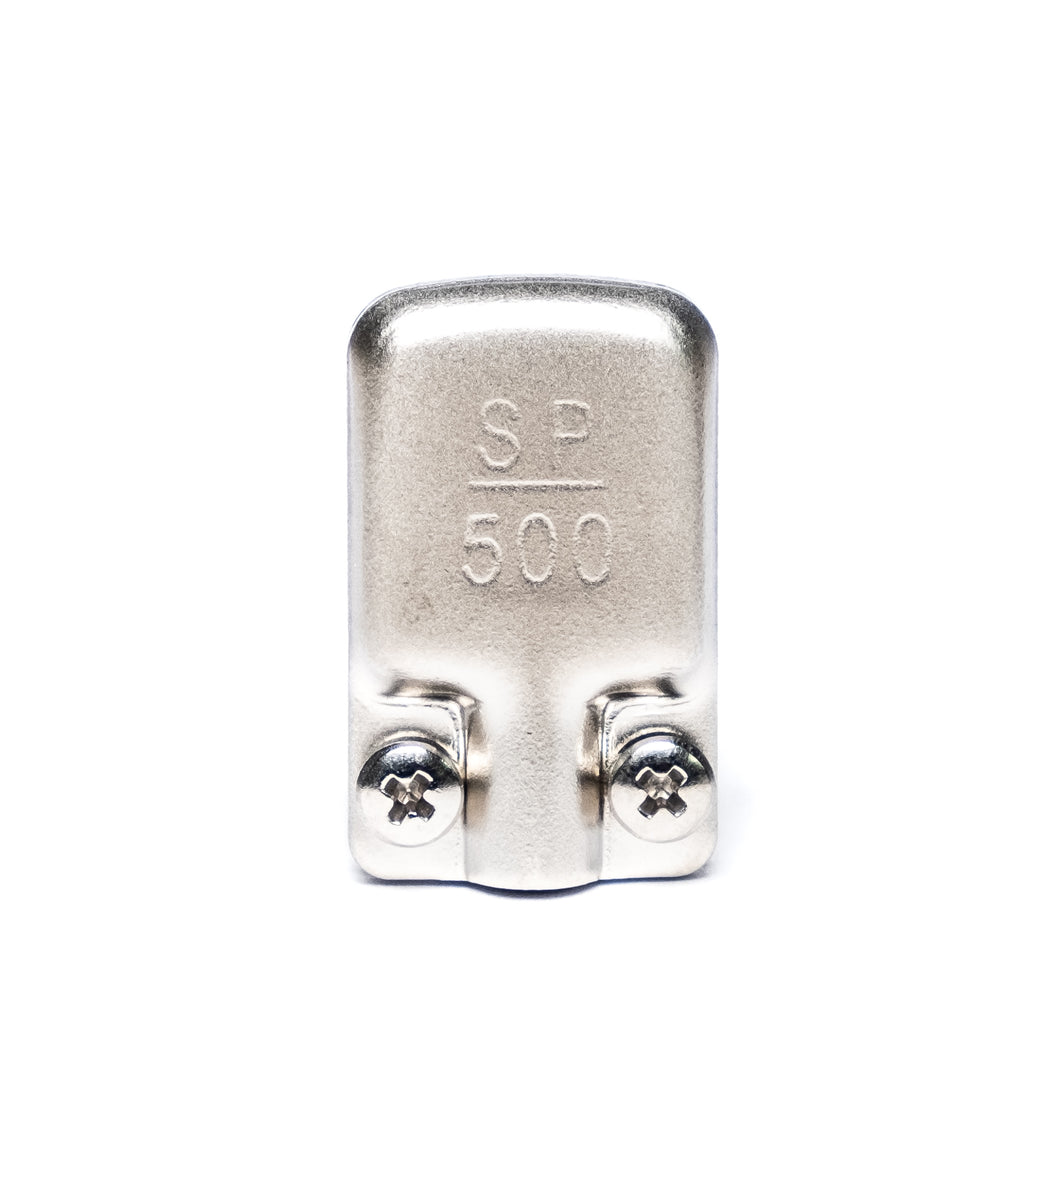 Squareplug SP500